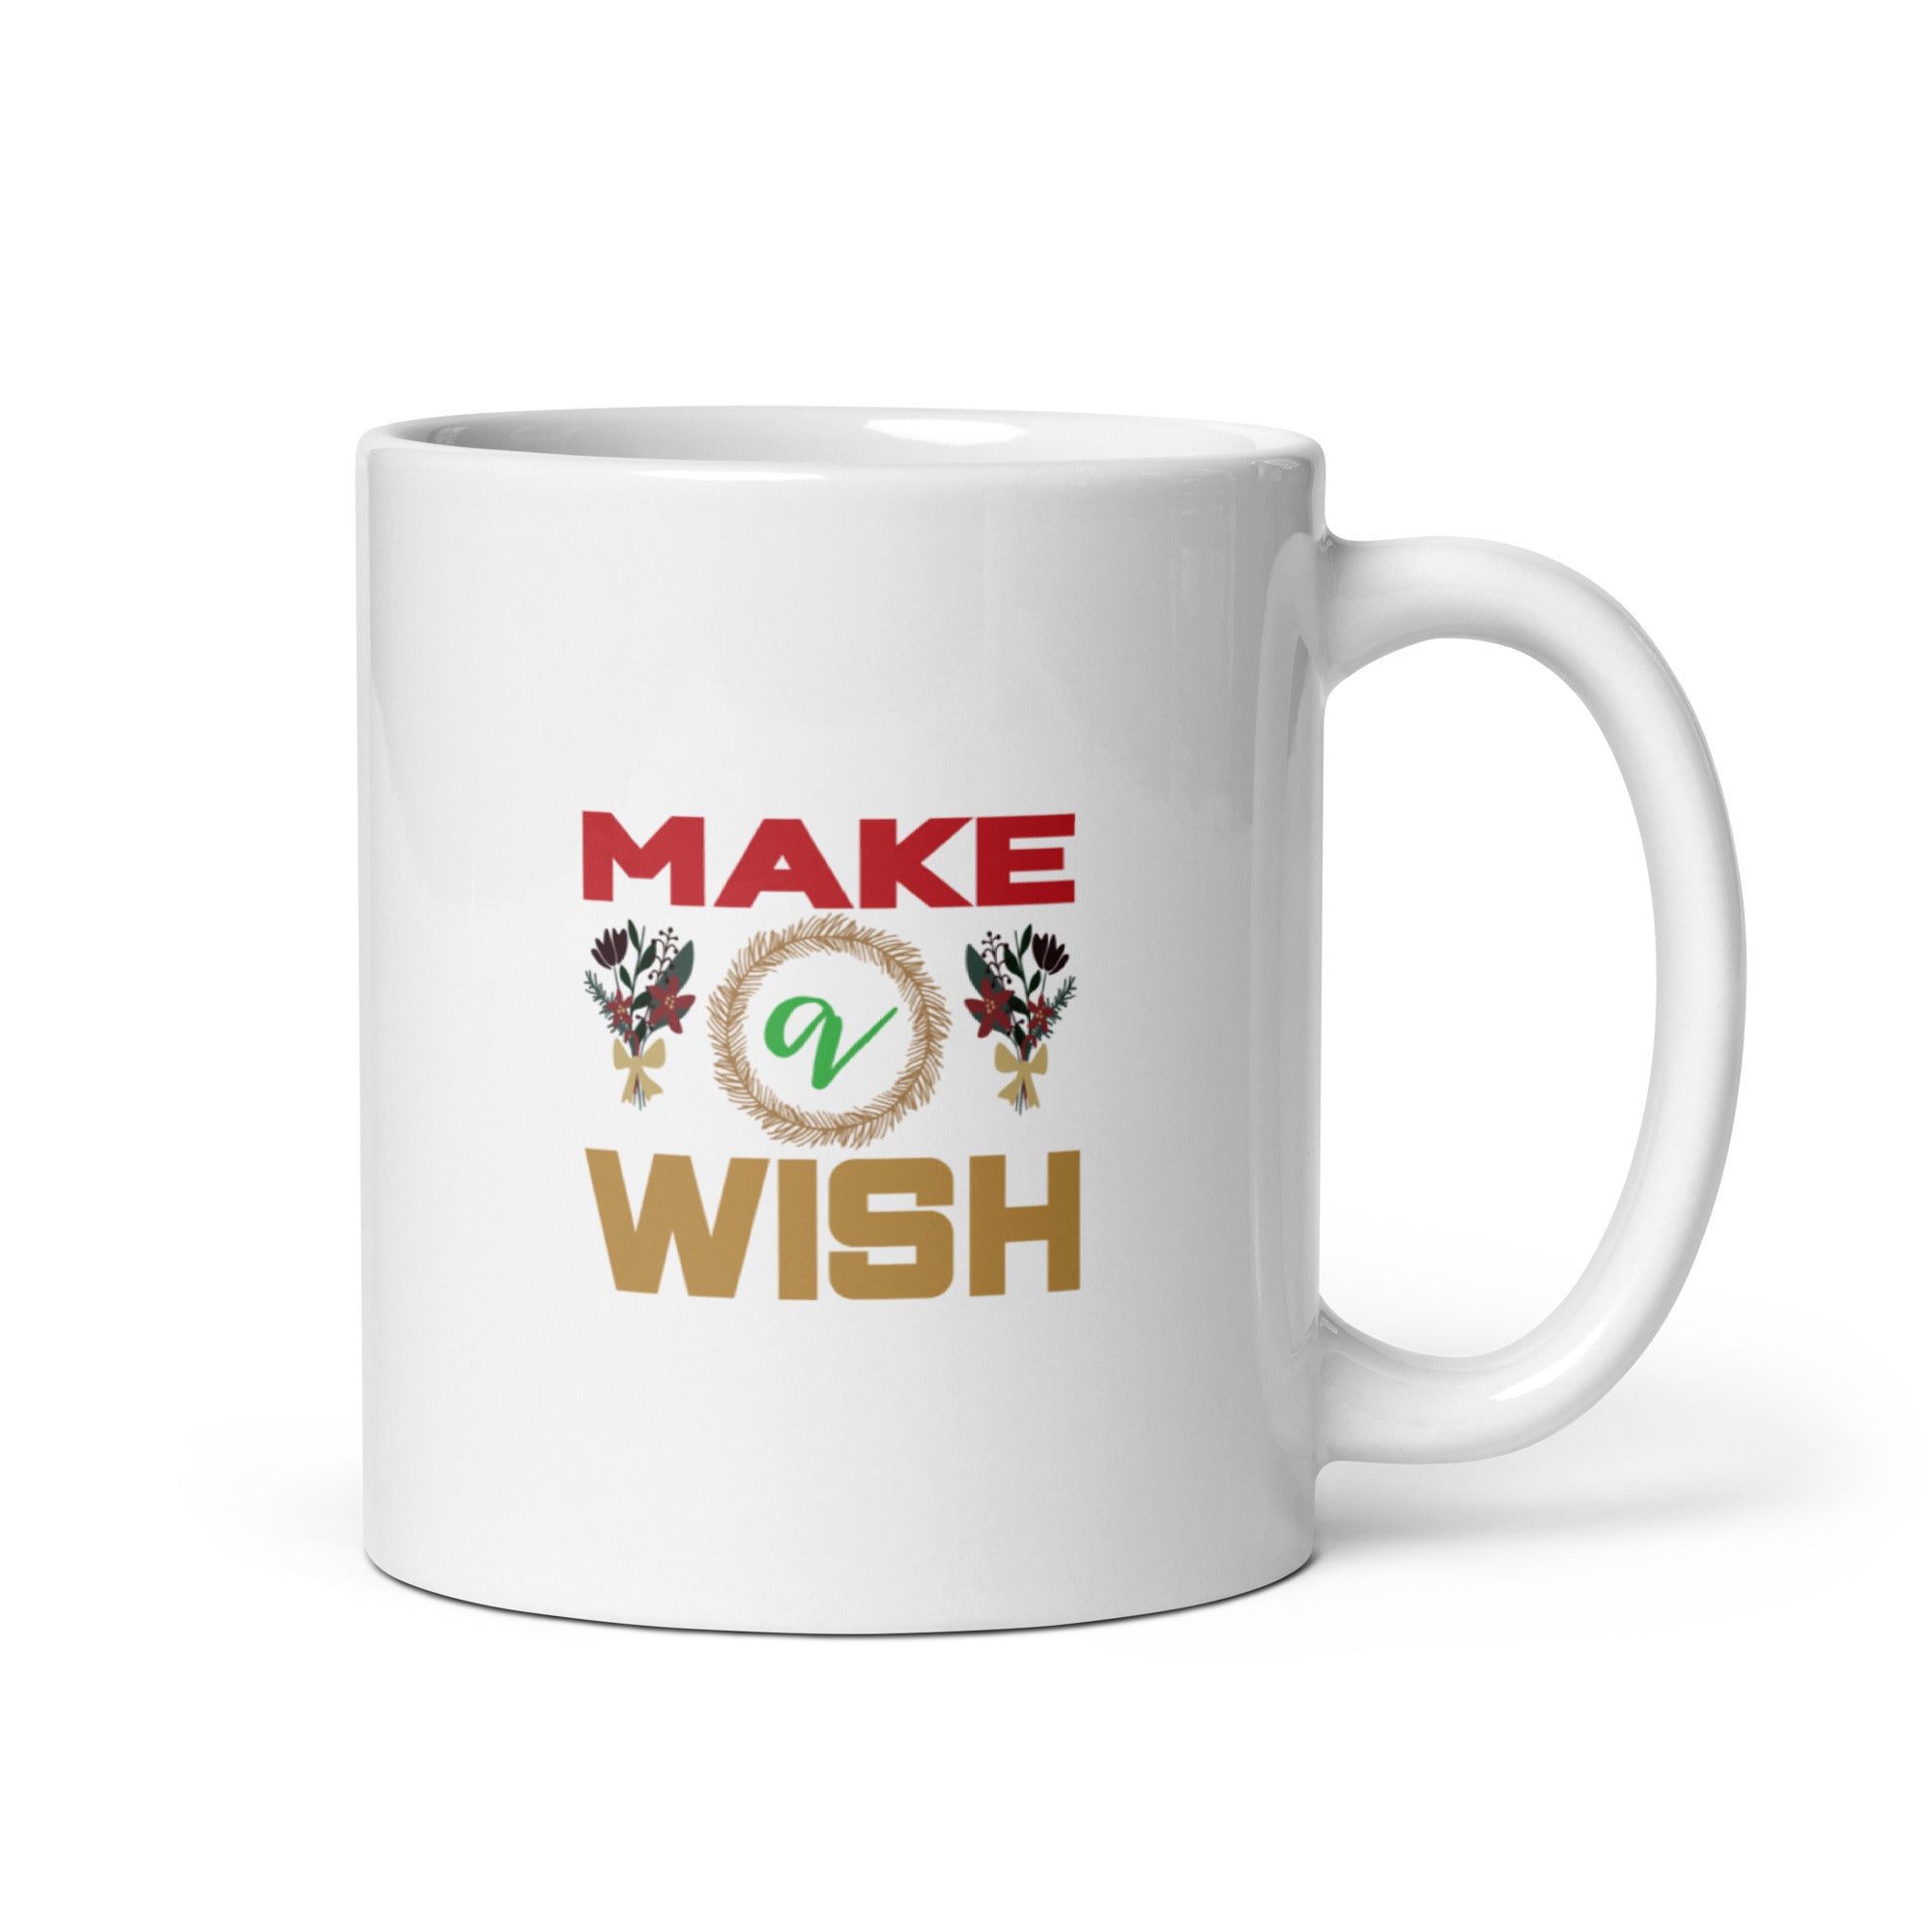 Make A Wish - White glossy mug